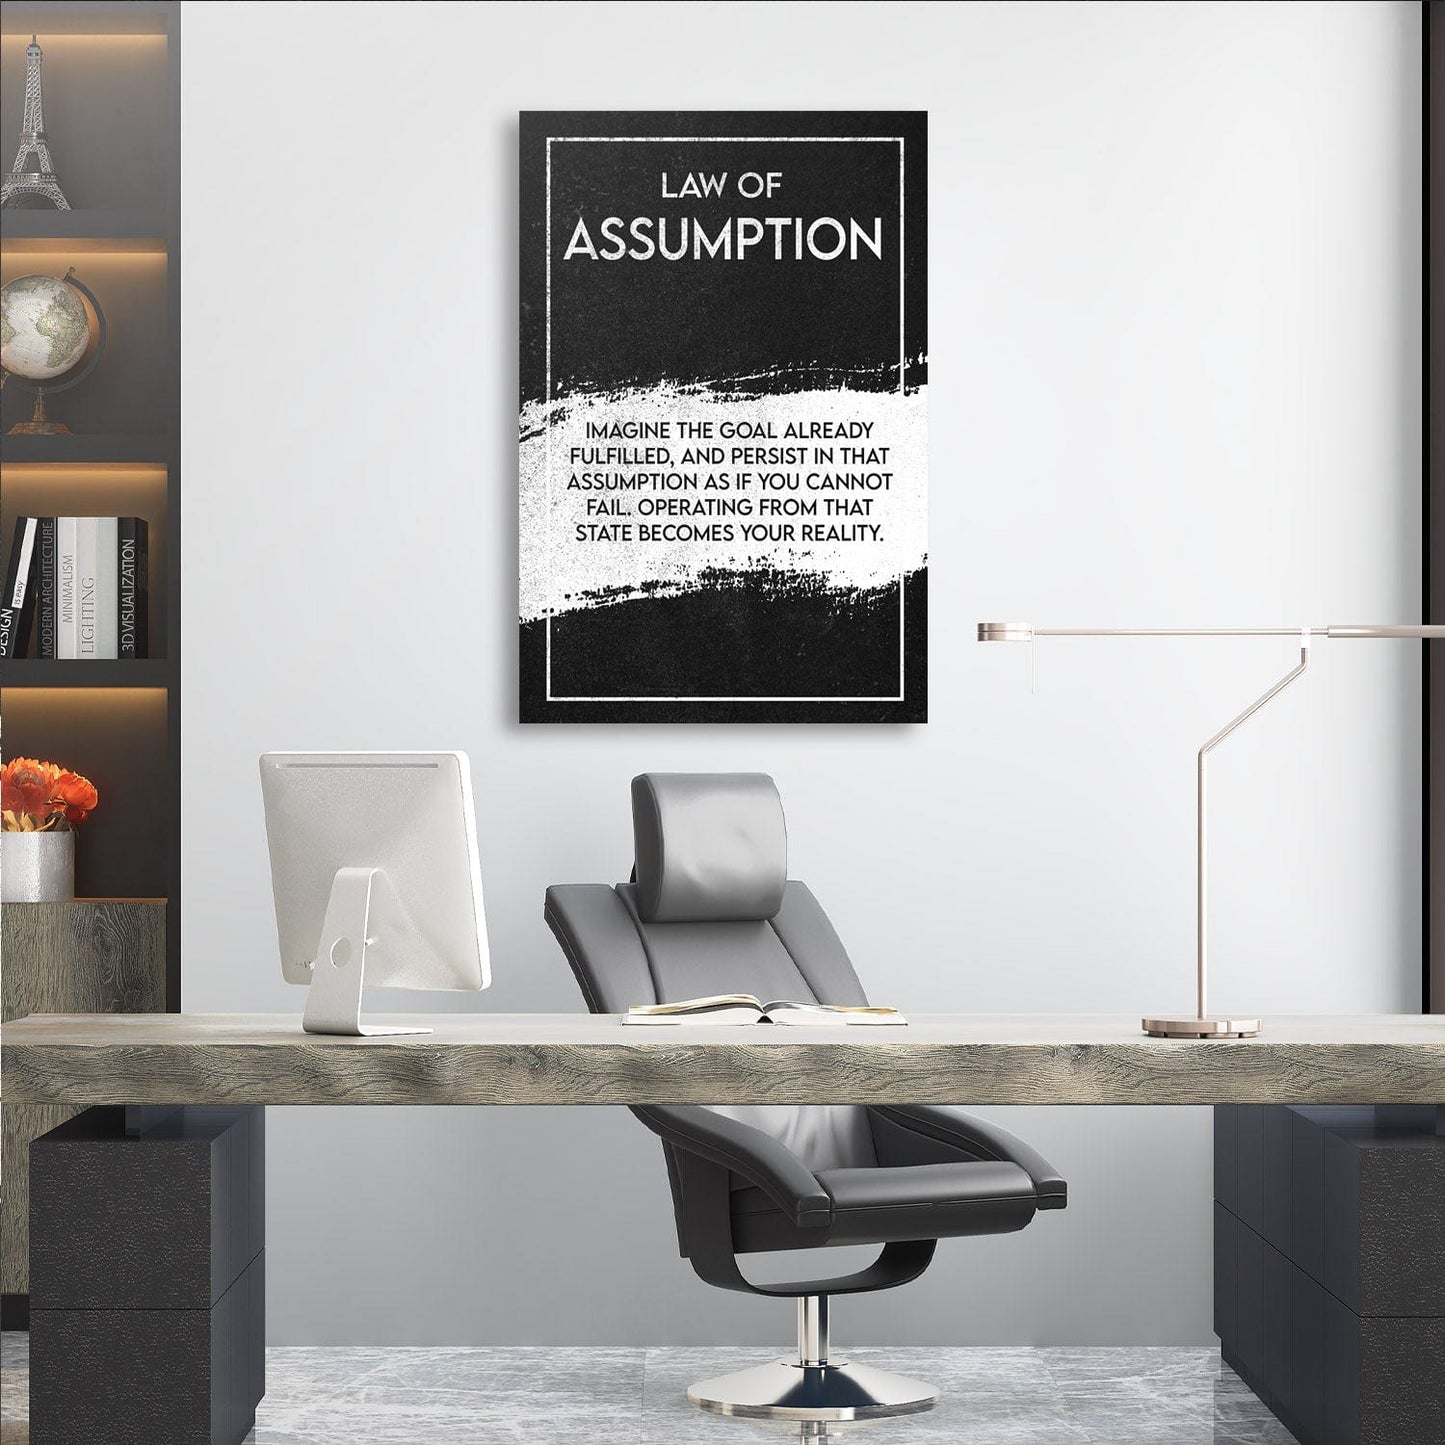 Law of Assumption - Neville Goddard Inspired Wall Art | Inspirational Wall Art Motivational Wall Art Quotes Office Art | ImpaktMaker Exclusive Canvas Art Portrait